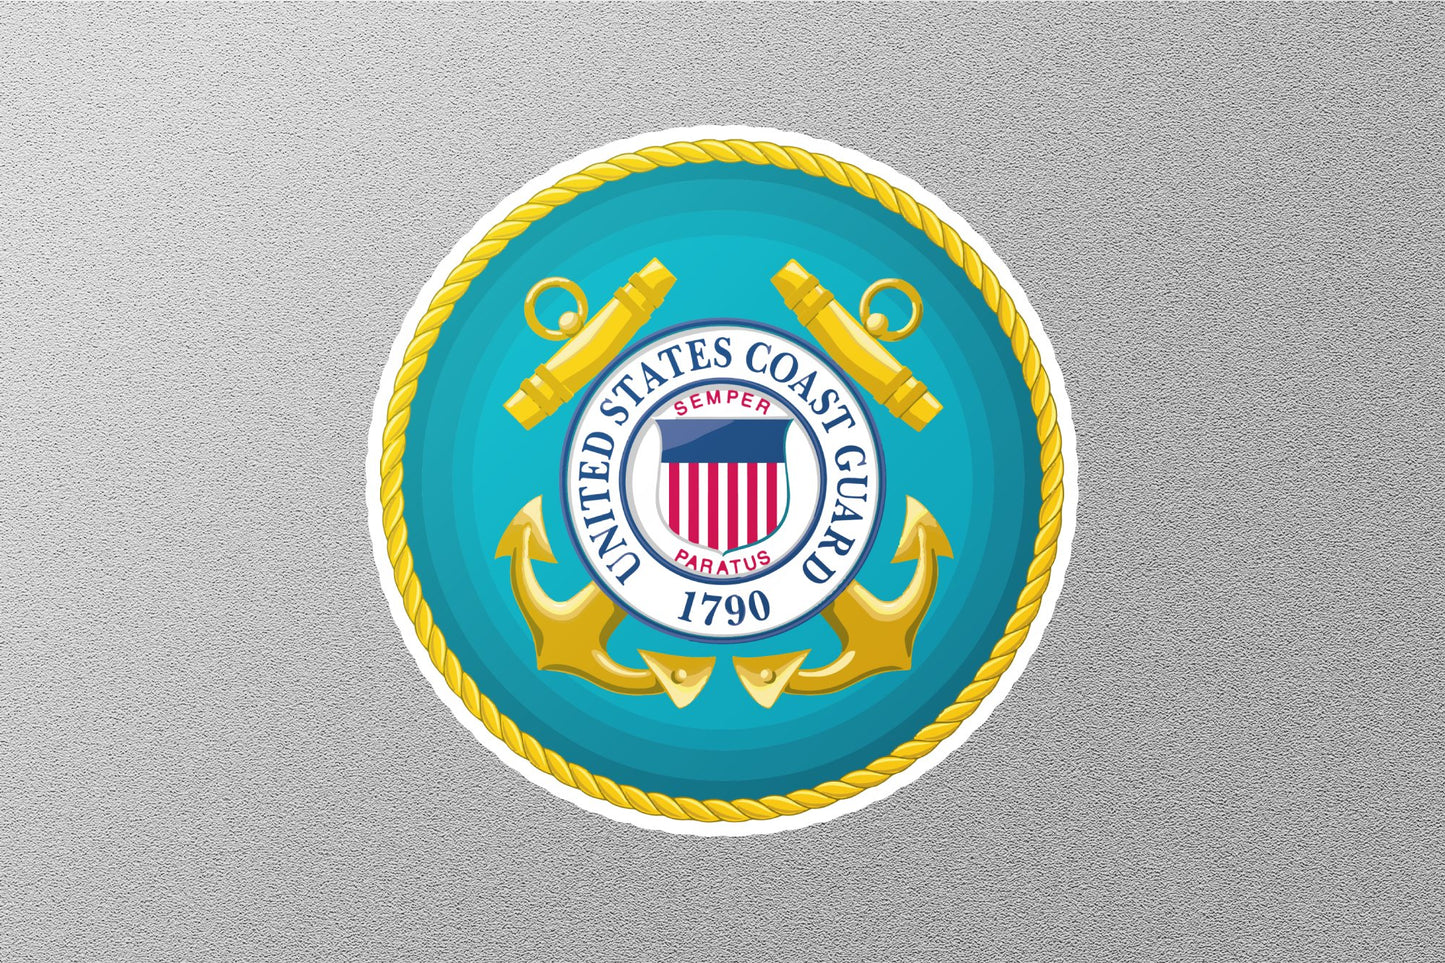 United States Coast Guard Sticker